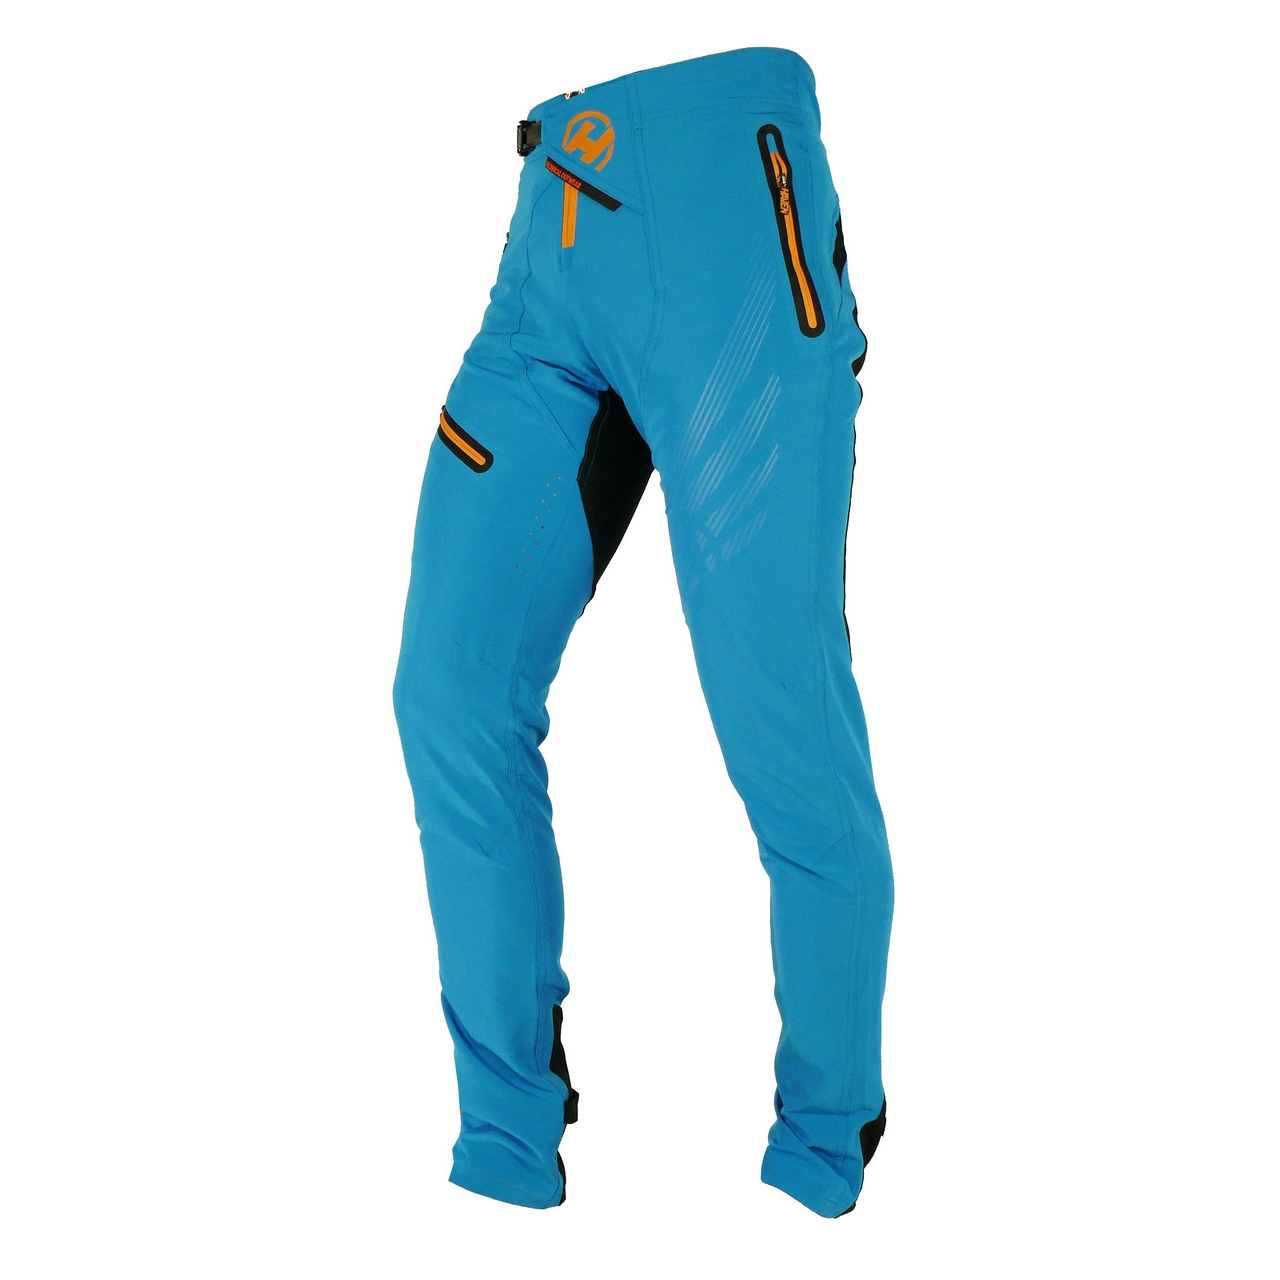 Kalhoty unisex Haven Energizer - modré-oranžové, L